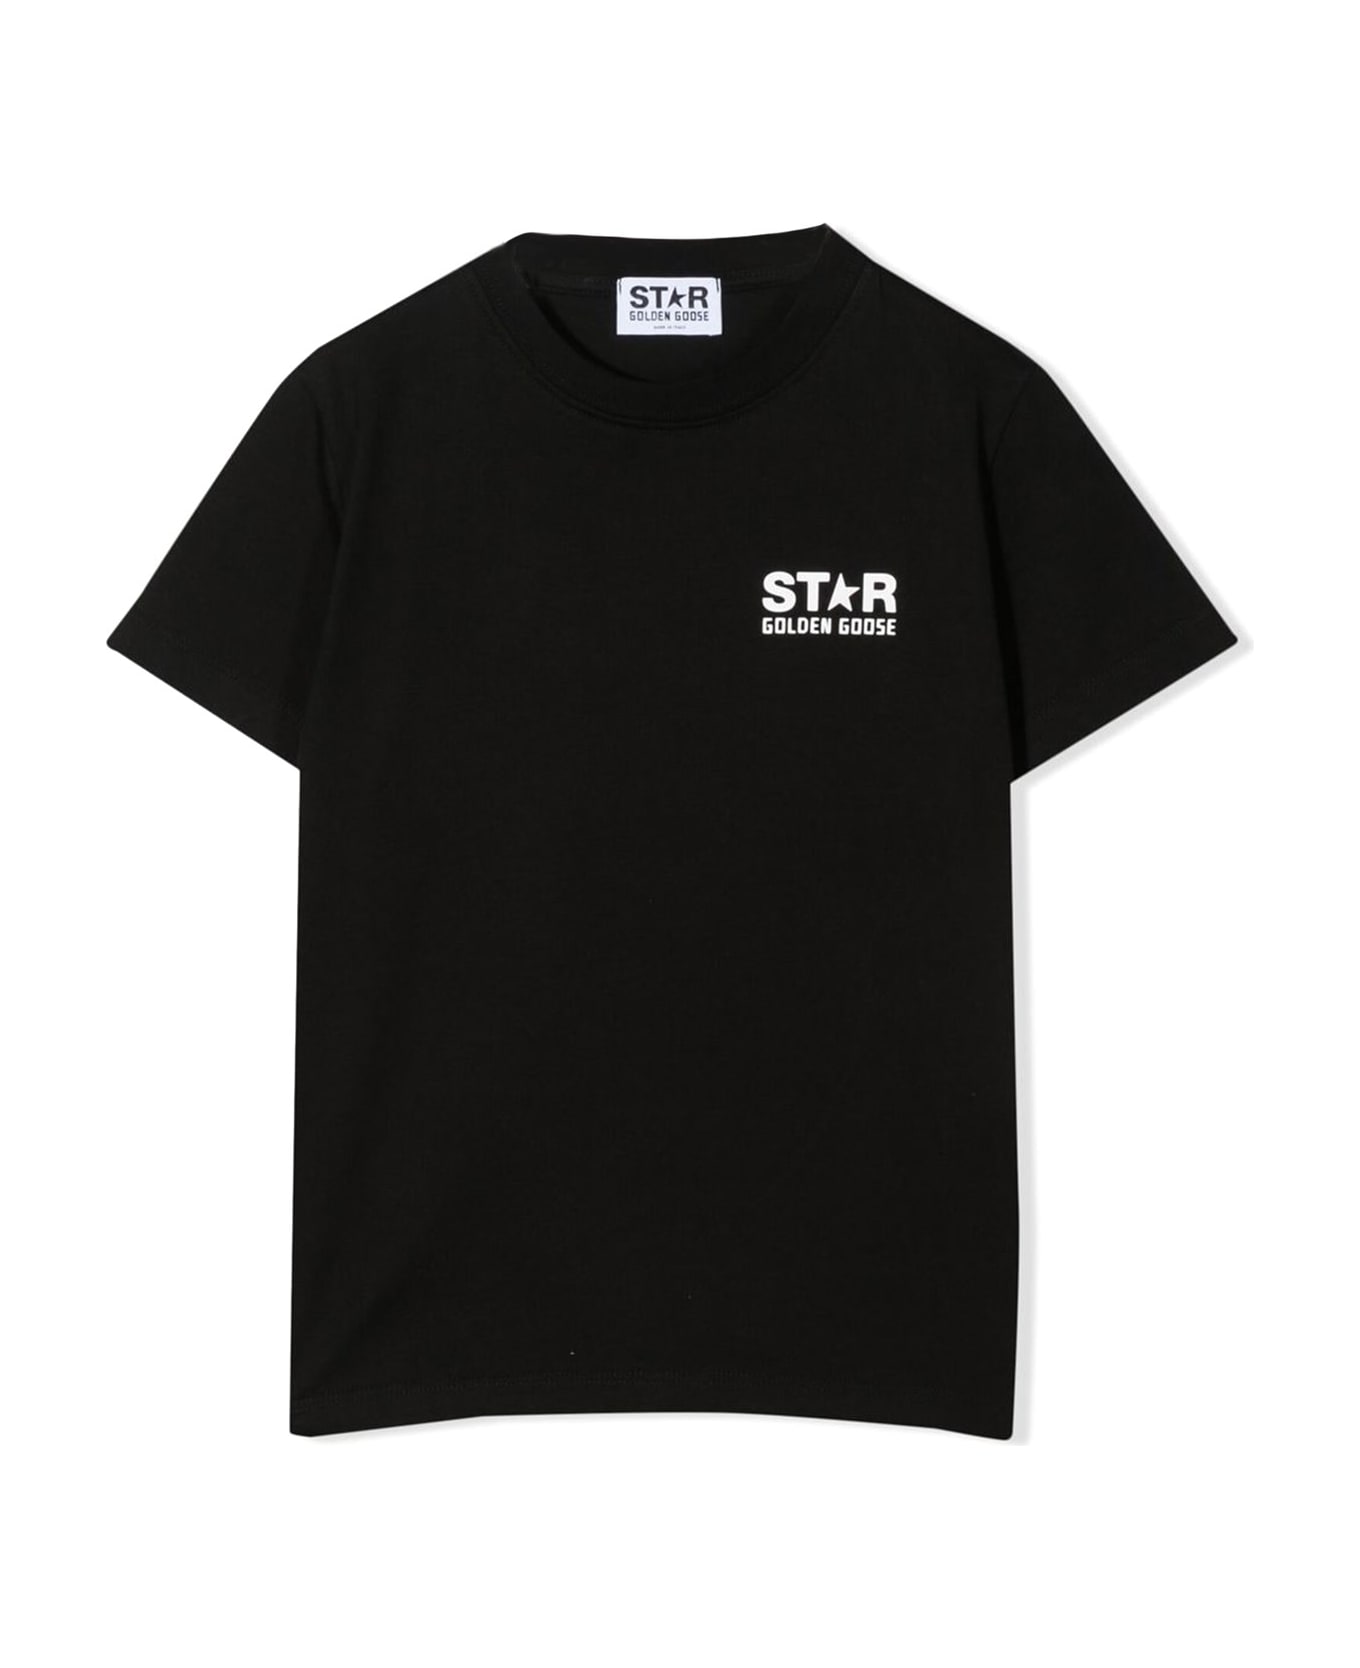 Golden Goose Star/ Boy's T-shirt S/s Logo/ Big Star Printed - NERO